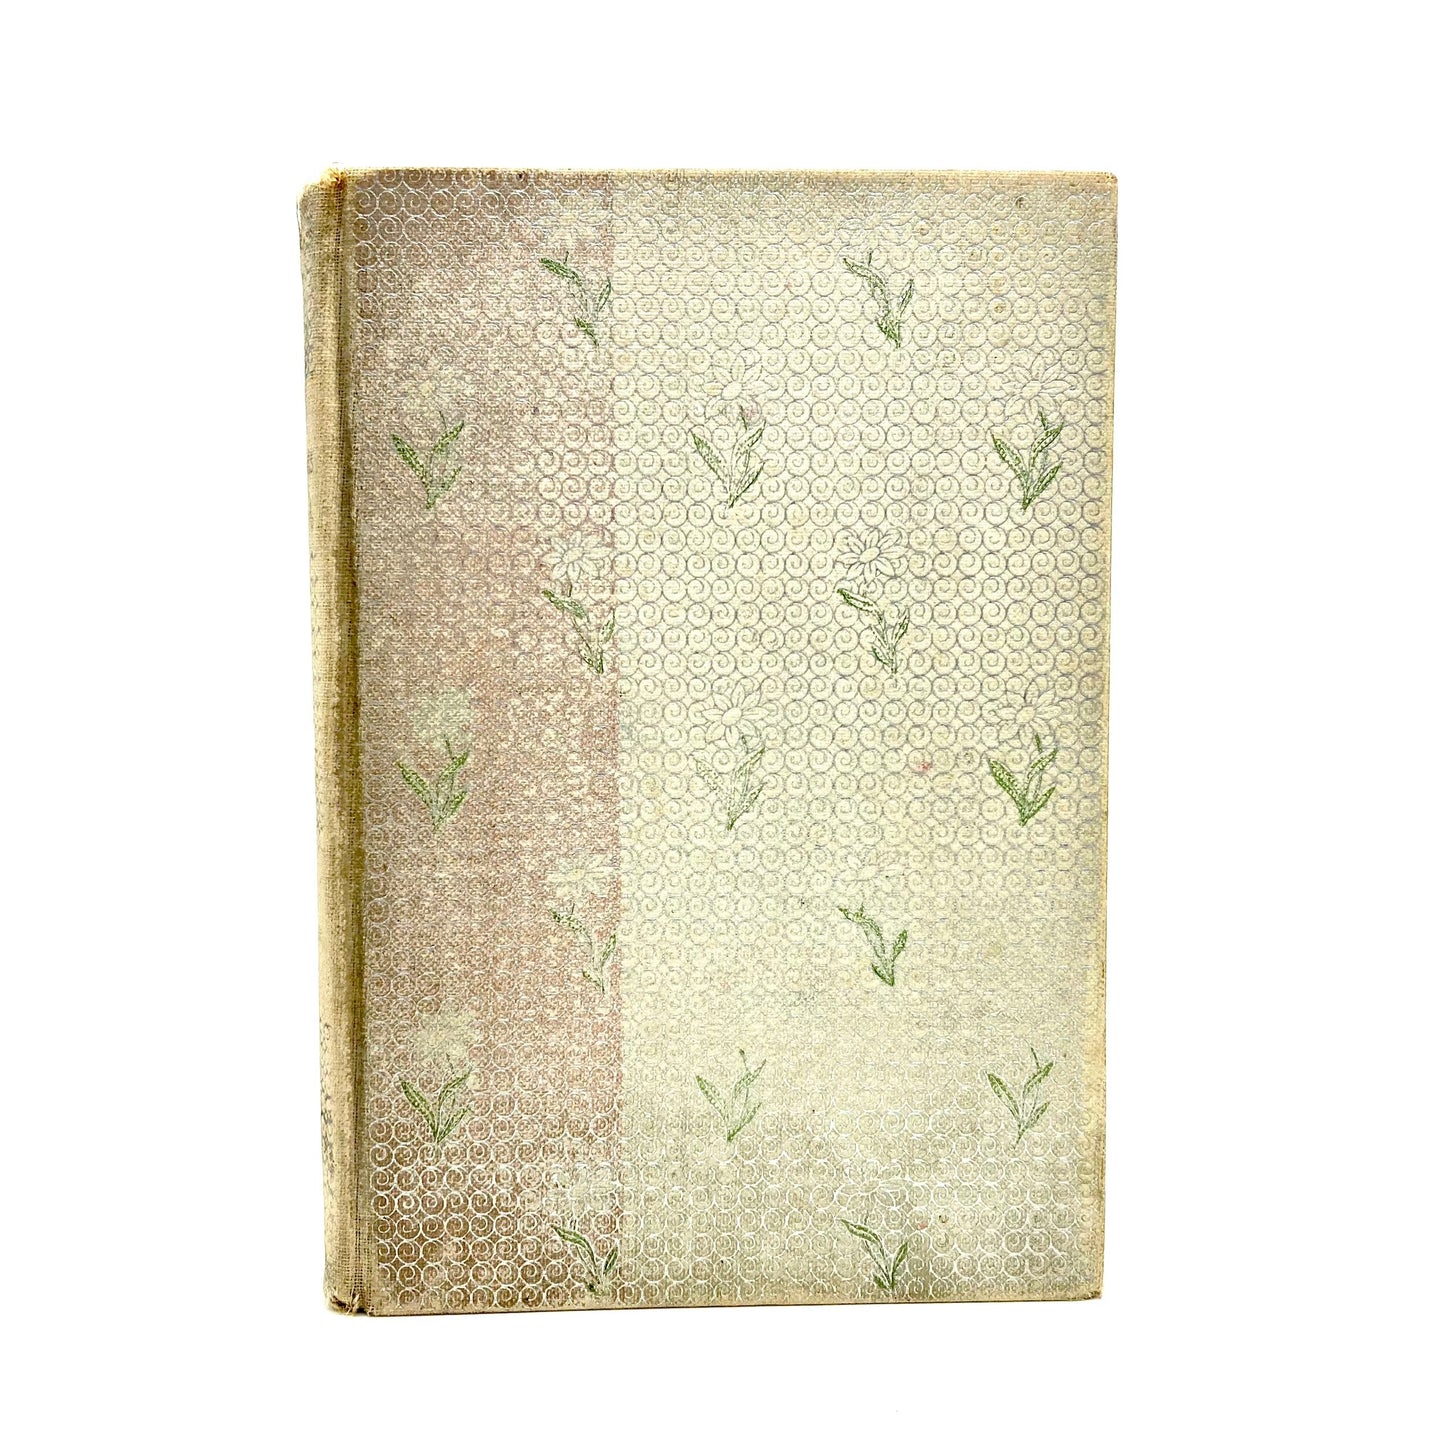 POE, Edgar Allan "Poems" [Henry Altemus, 1897] - Buzz Bookstore